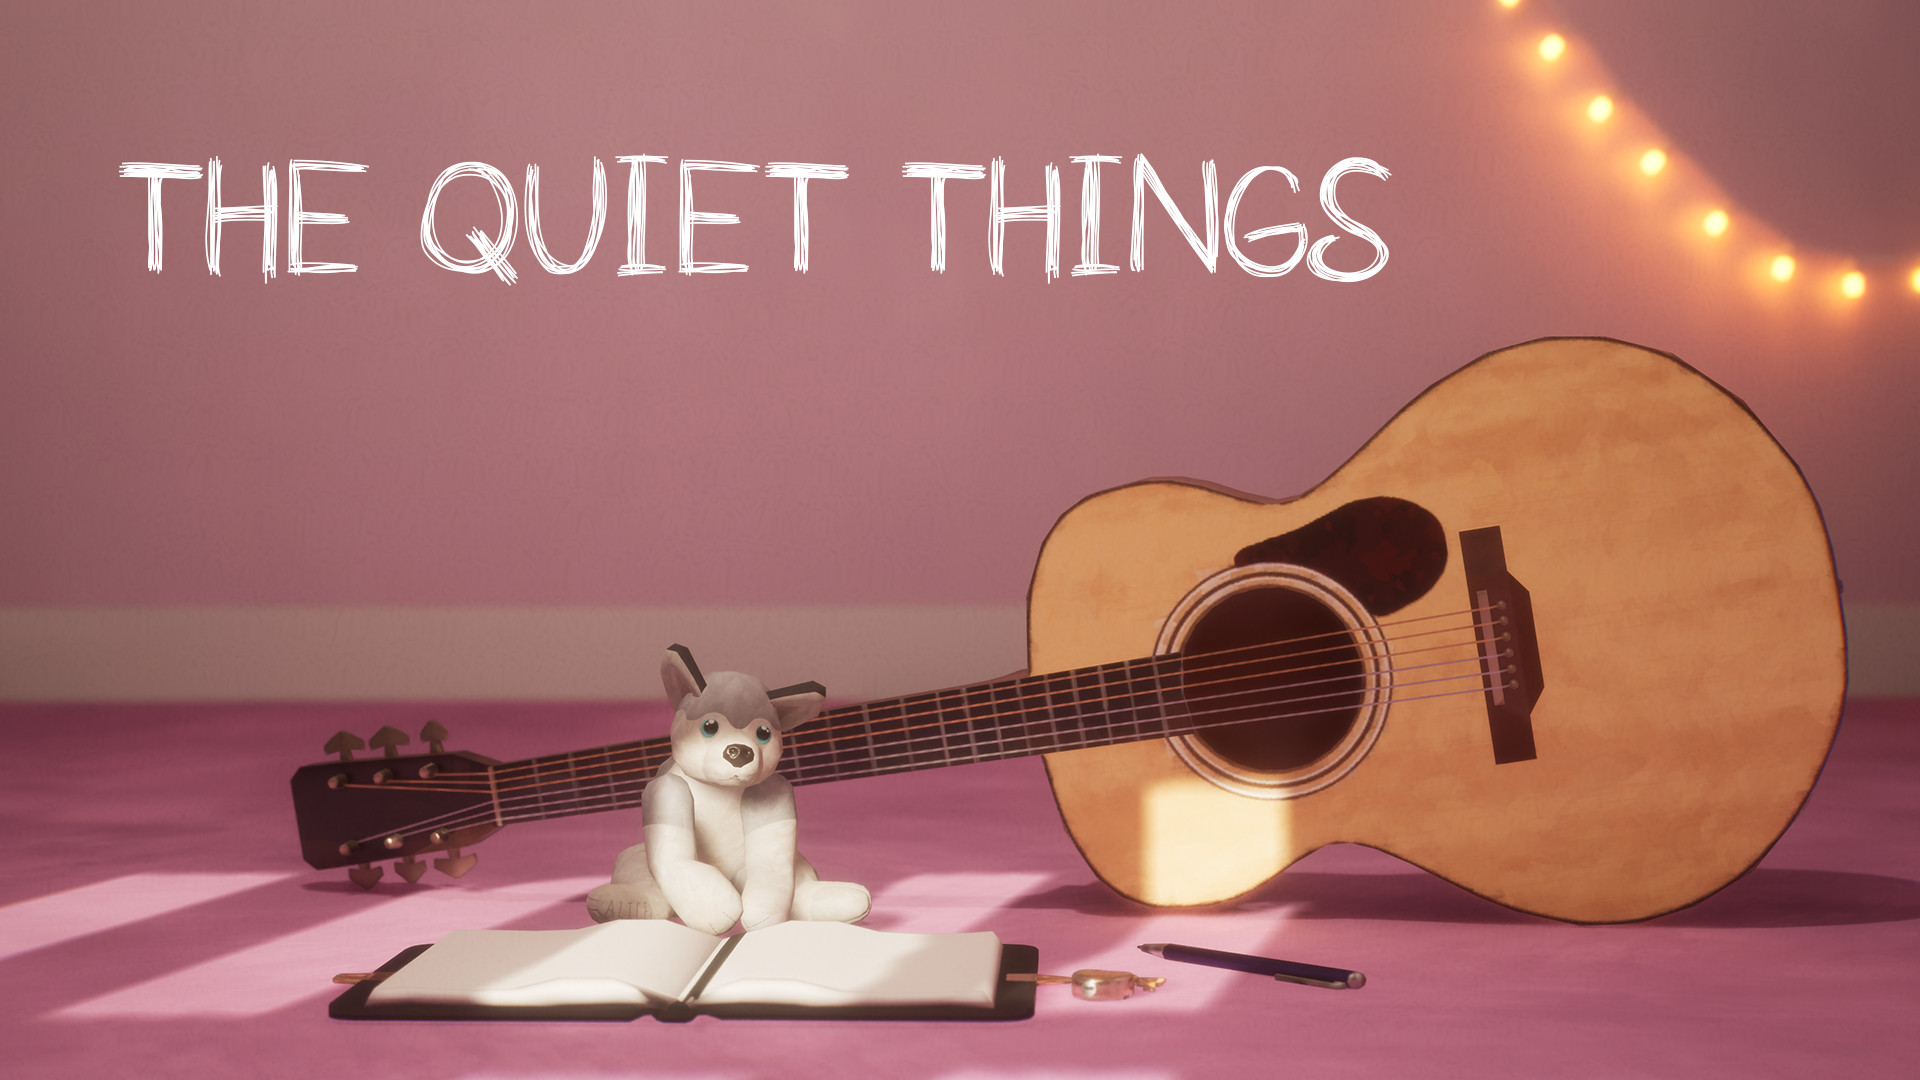 The Quiet Things on Kickstarter!